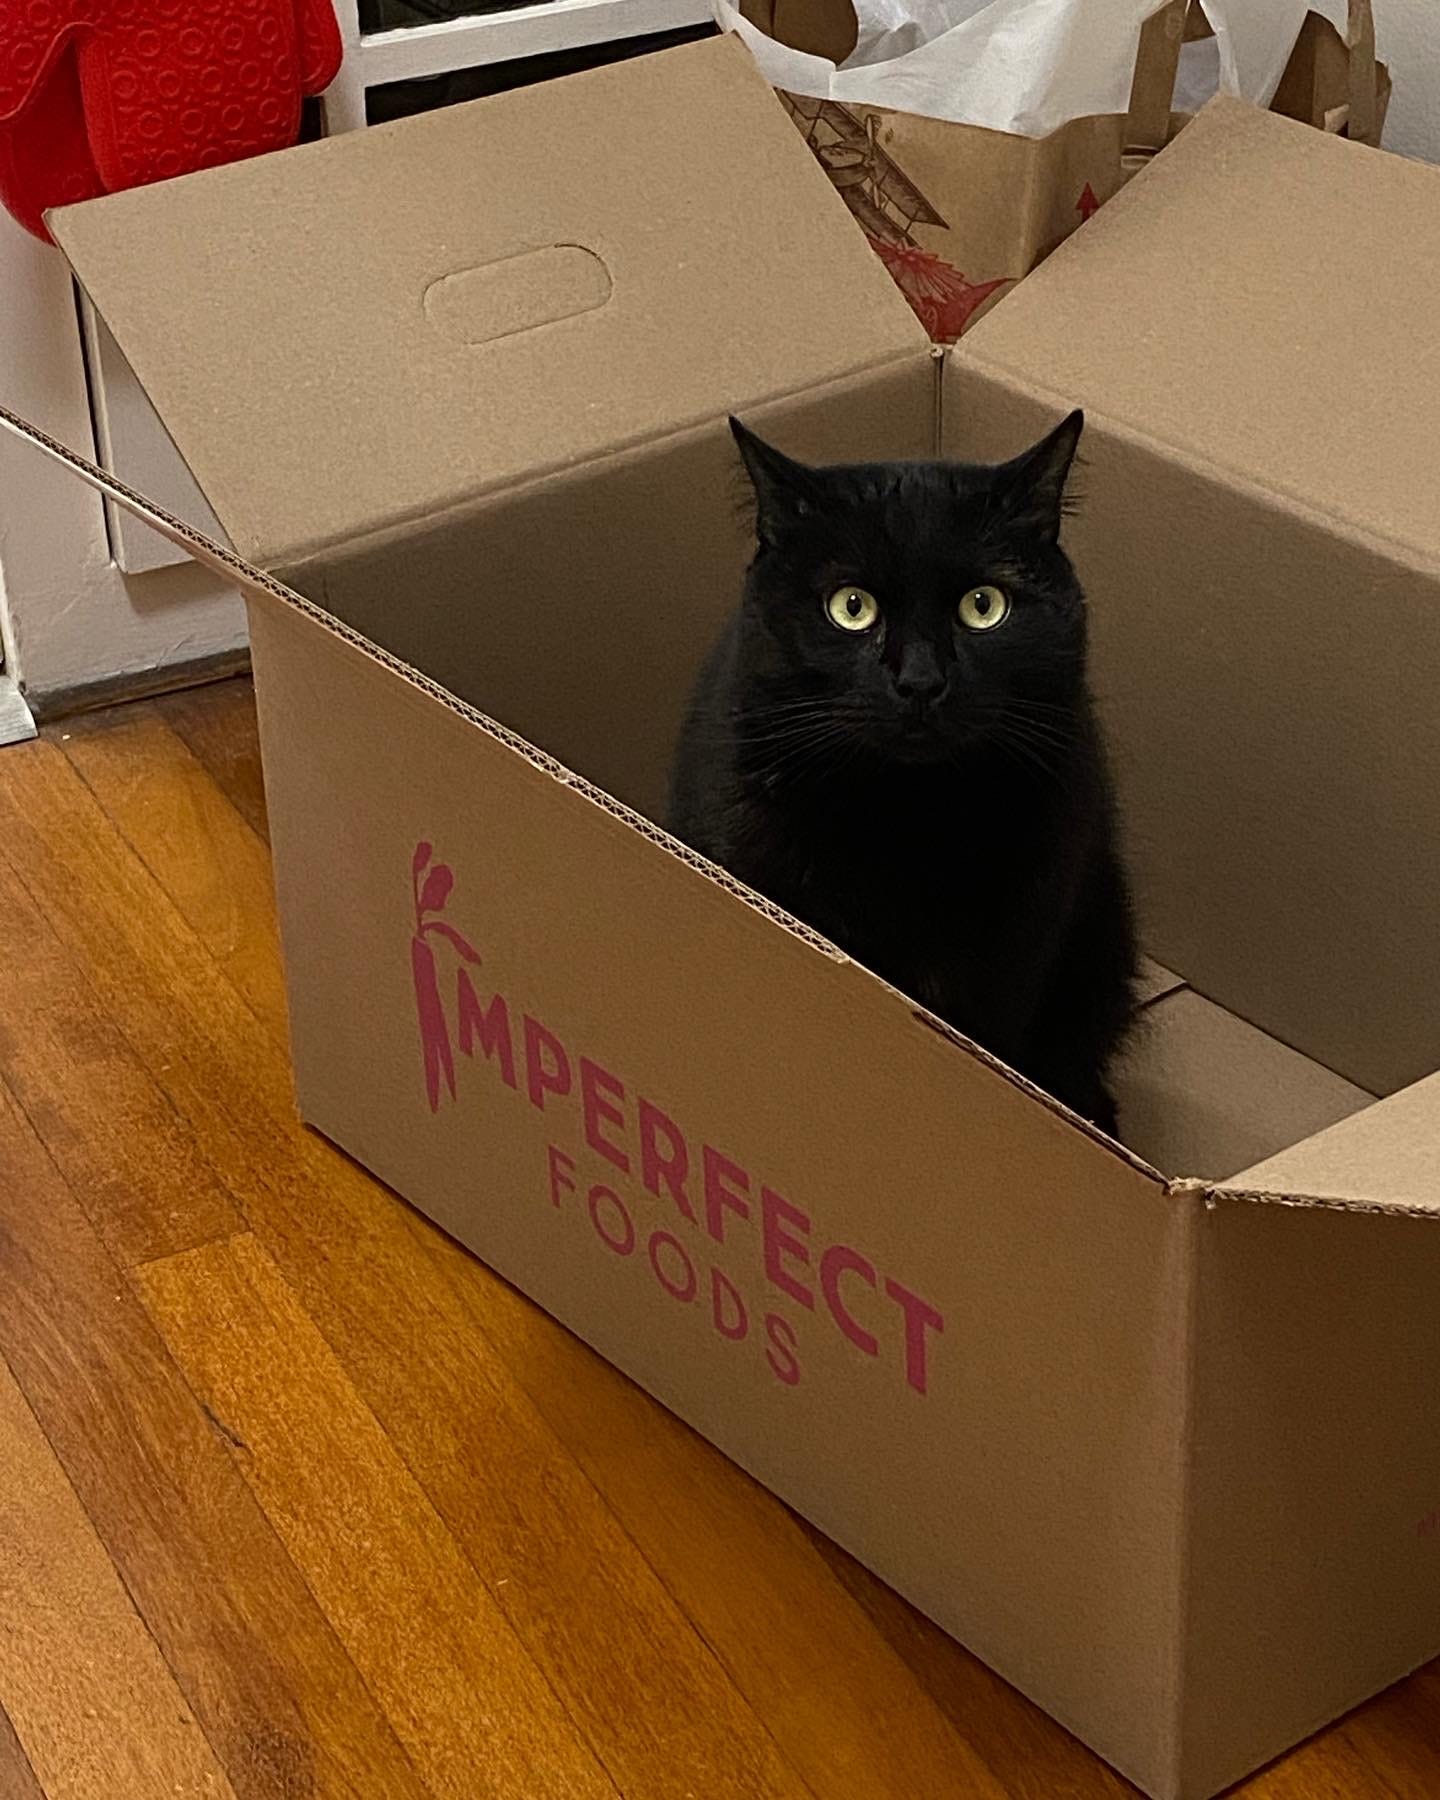 Gambit, the black cat, sitting in a cardboard box.